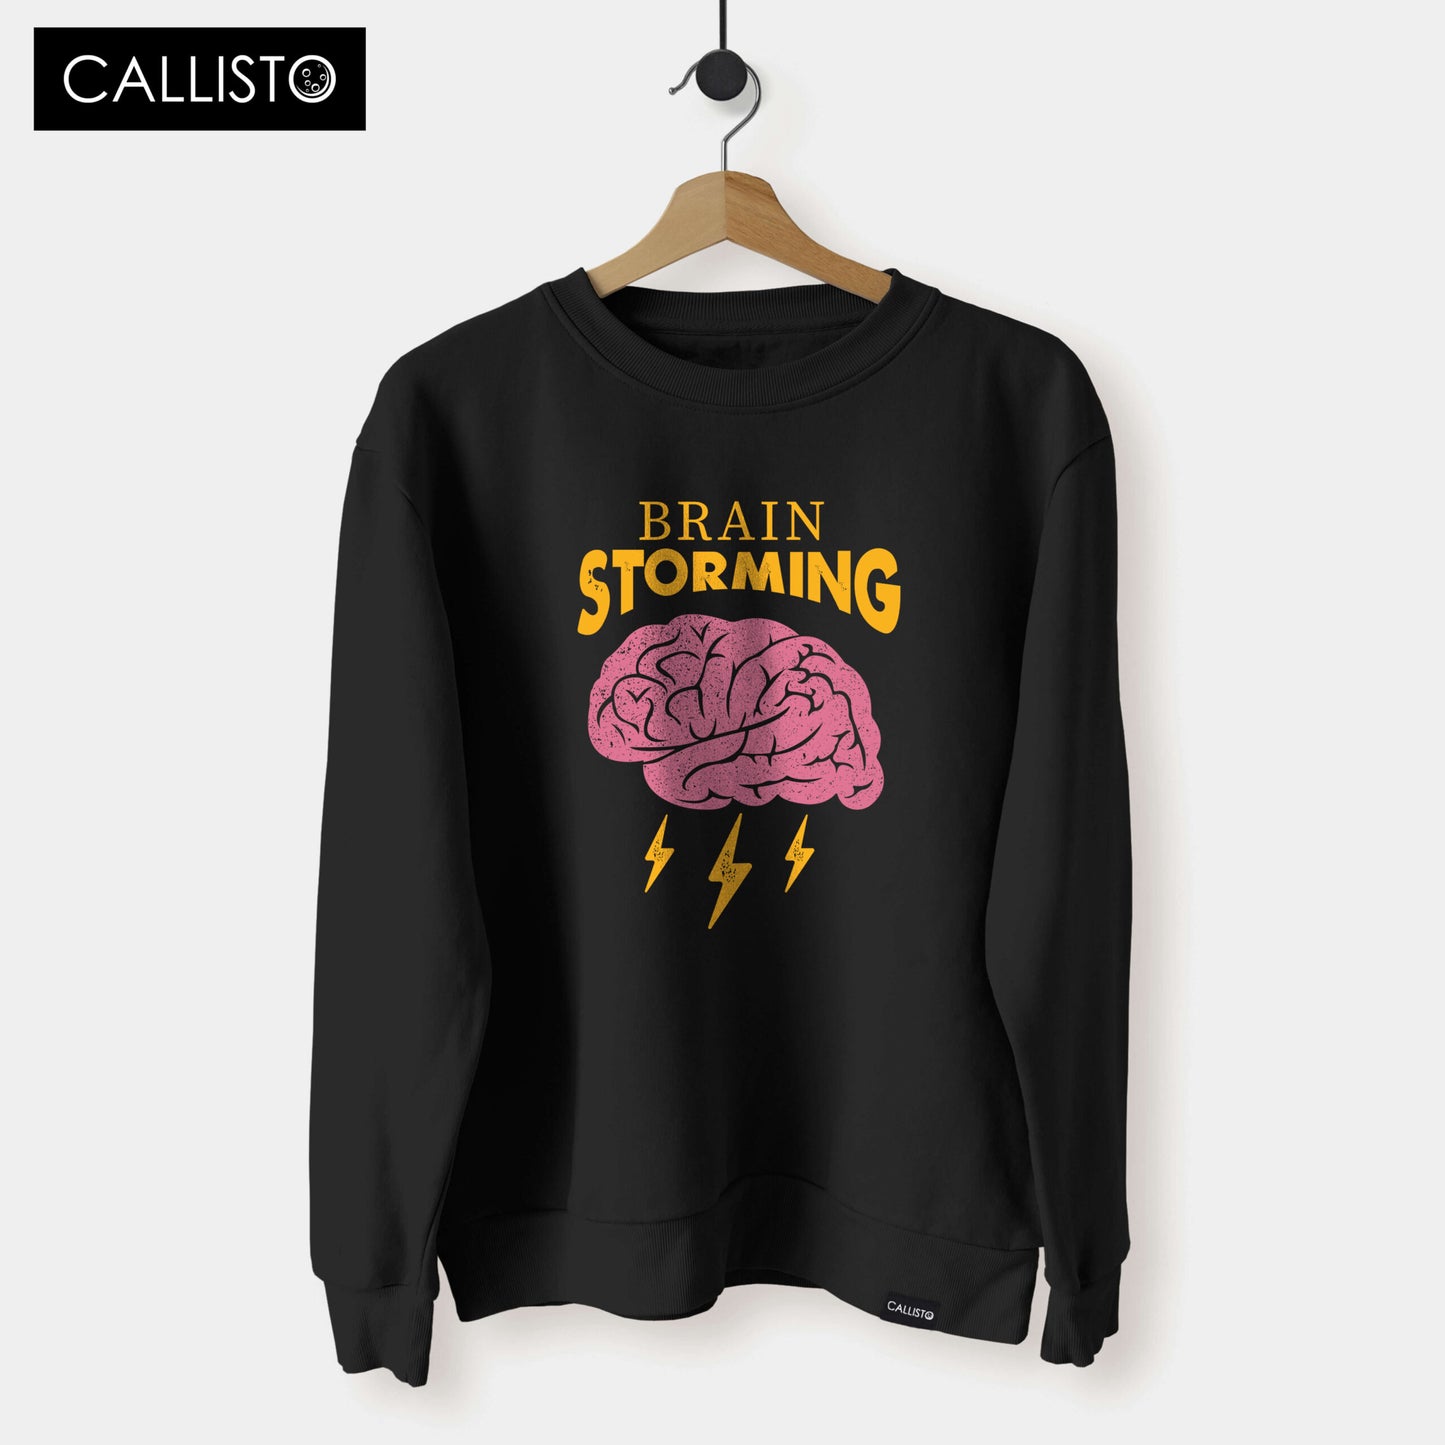 Brainstorming - Sweat Shirt